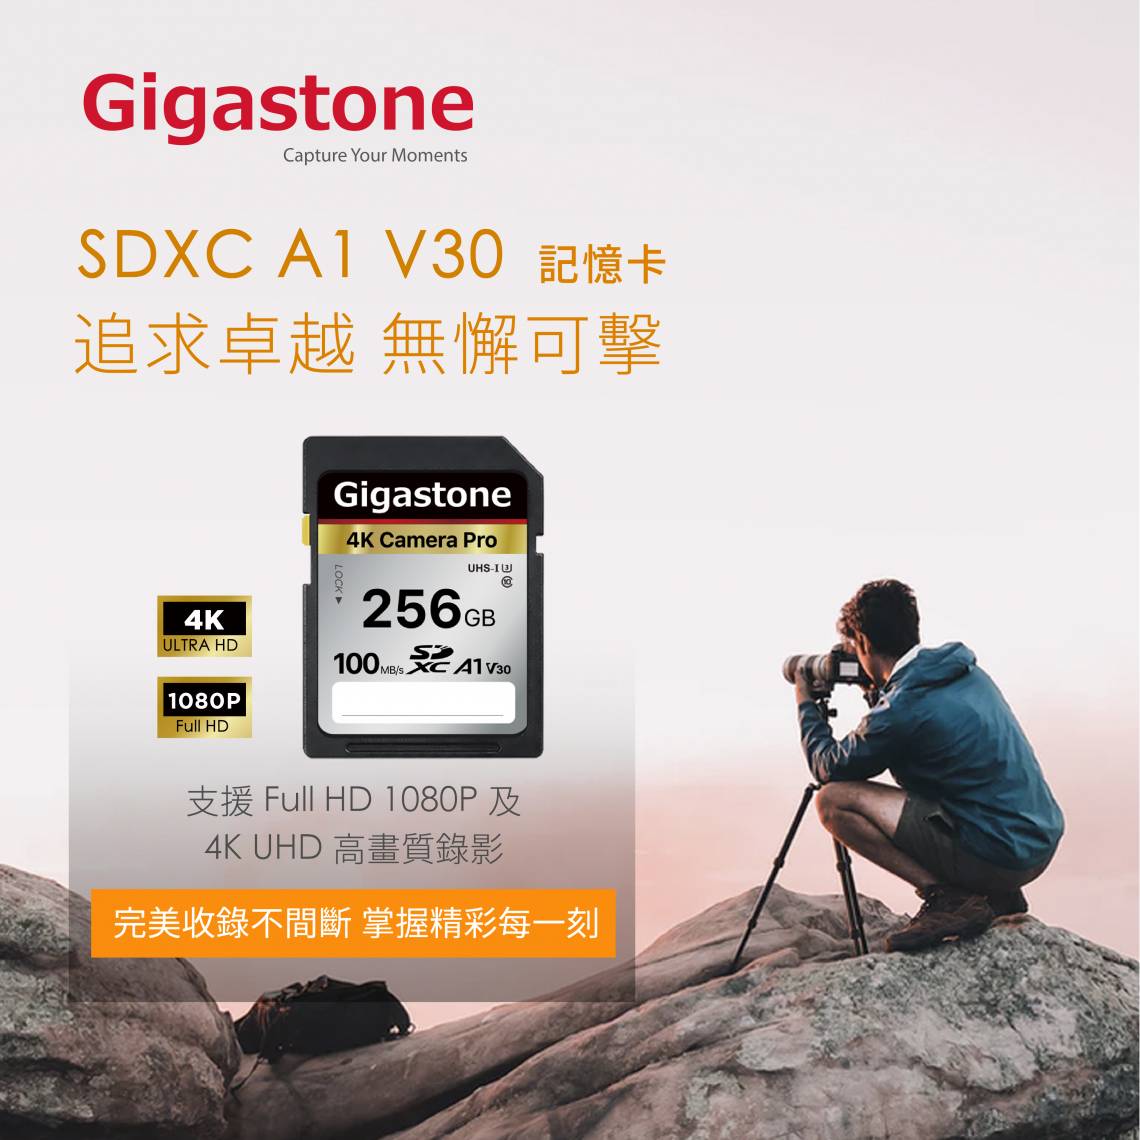 SDXC A1 V30-BN-20210623_1.jpg